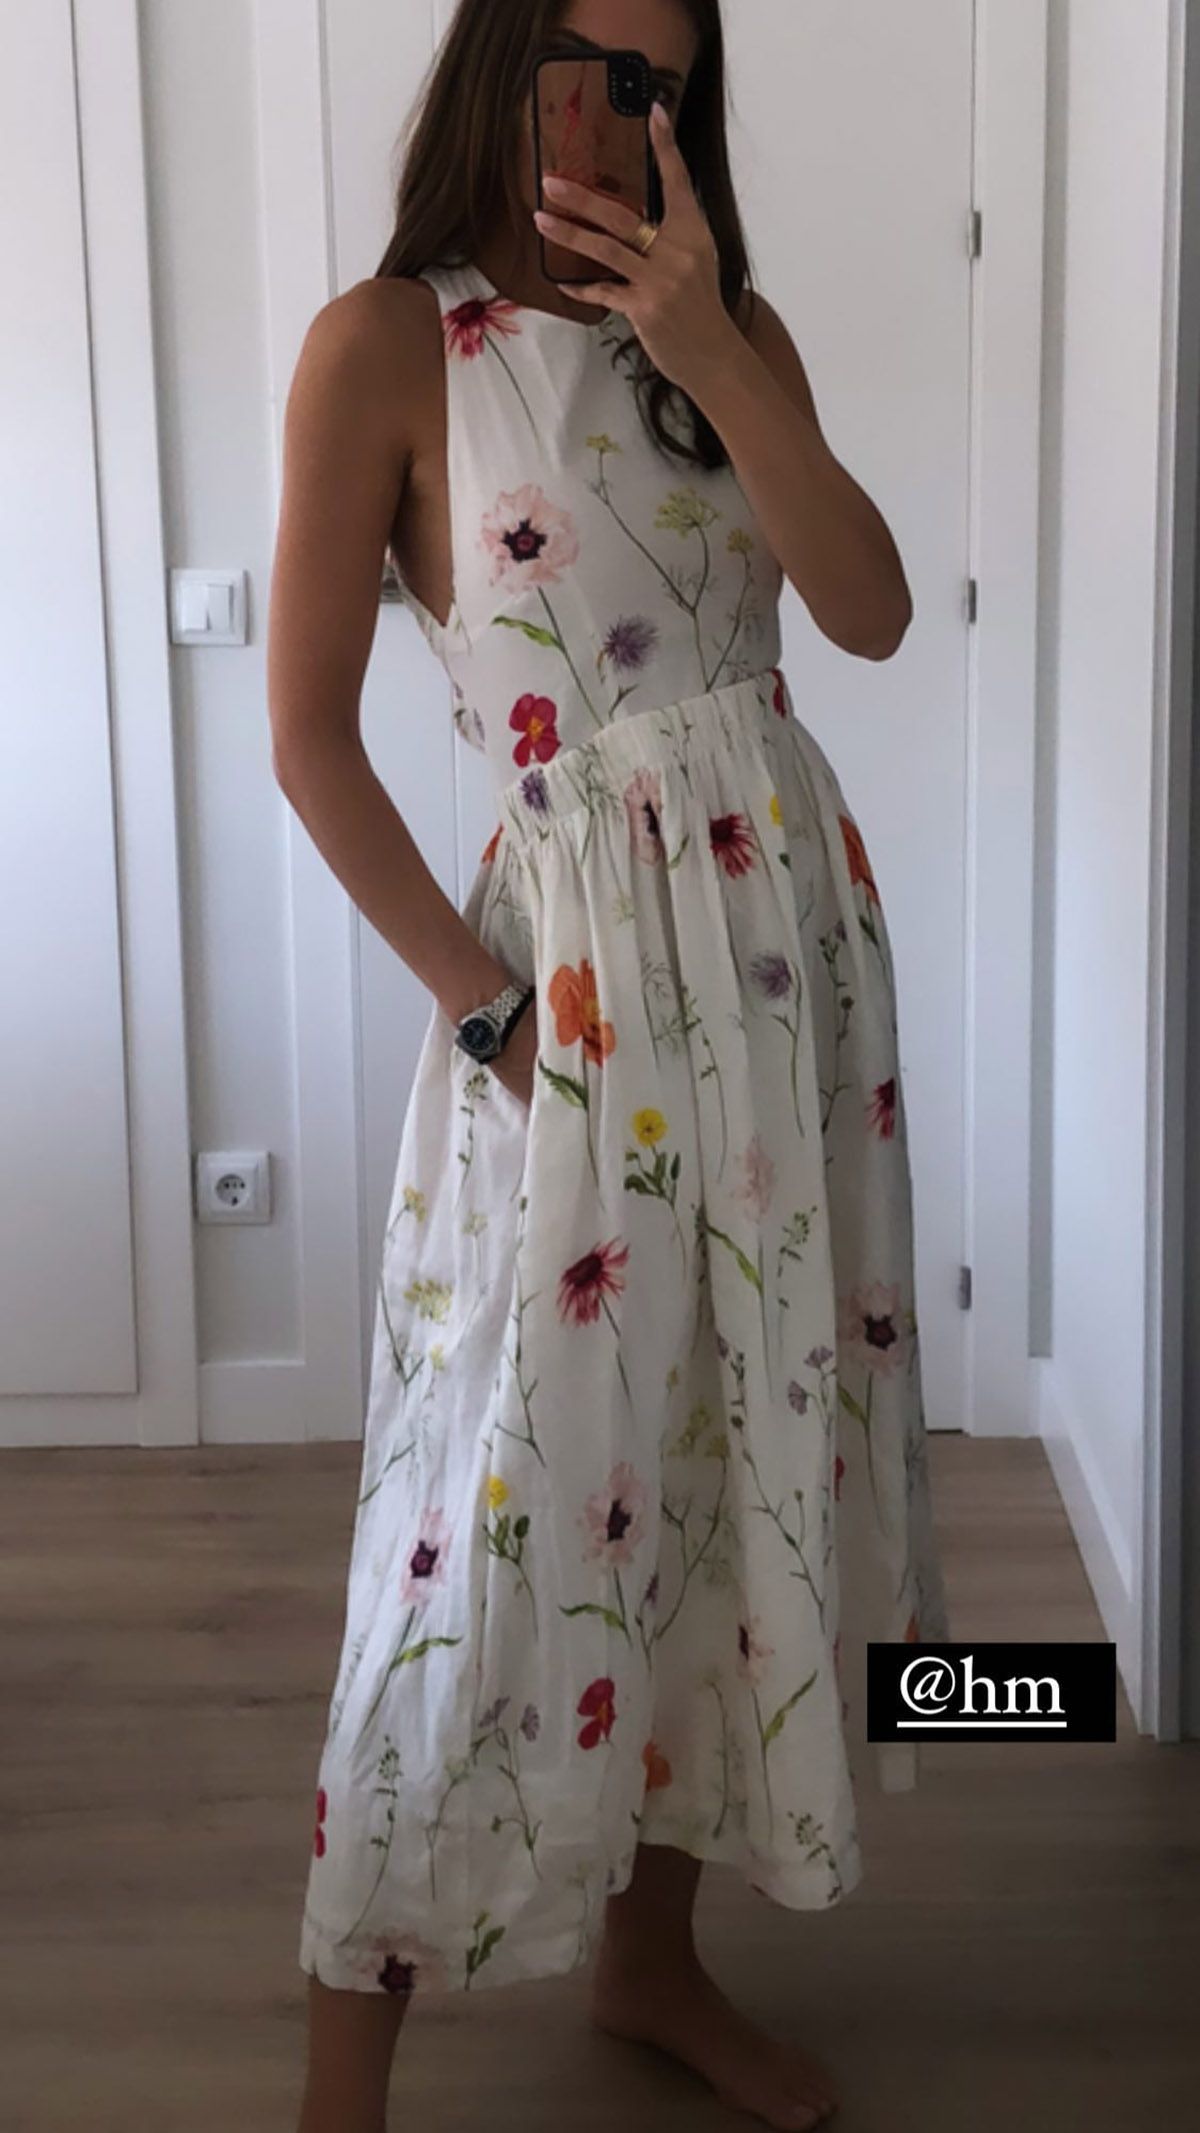 Silvia Zamora "Lady vestido de flores de H&M